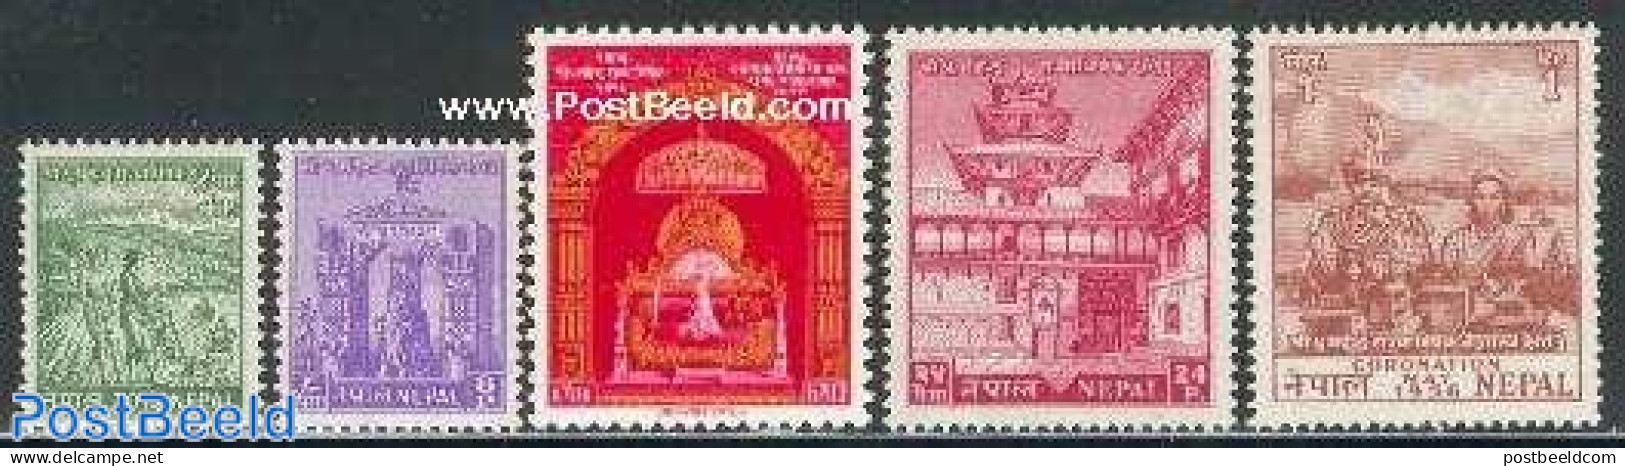 Nepal 1956 Coronation 5v, Mint NH, History - Kings & Queens (Royalty) - Royalties, Royals